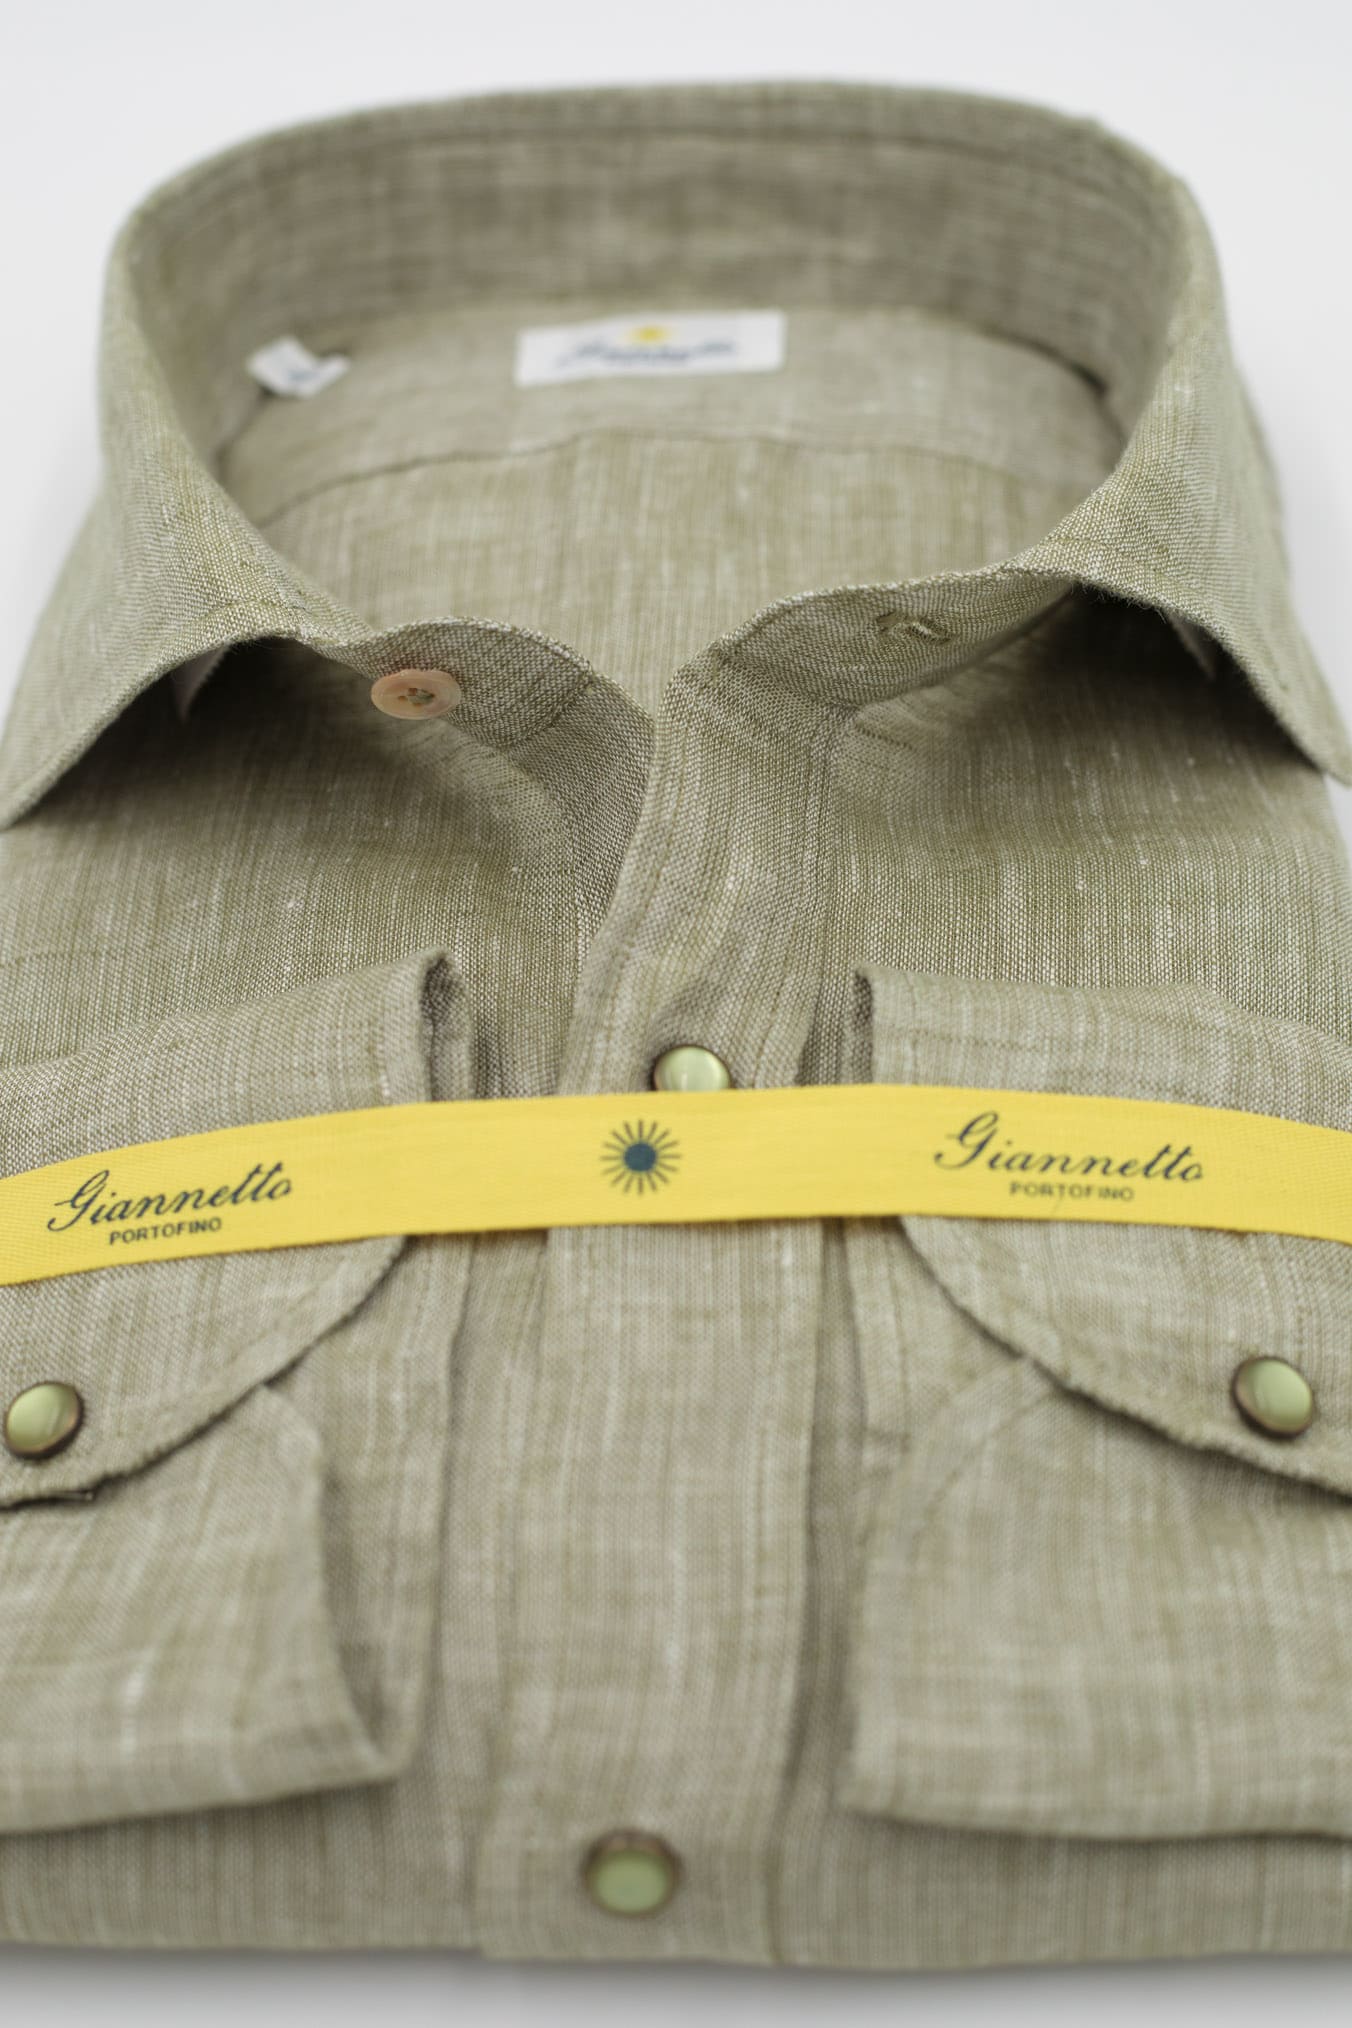 GIANNETTO PORTOFINO Green Linen Shirt COMFORT FIT